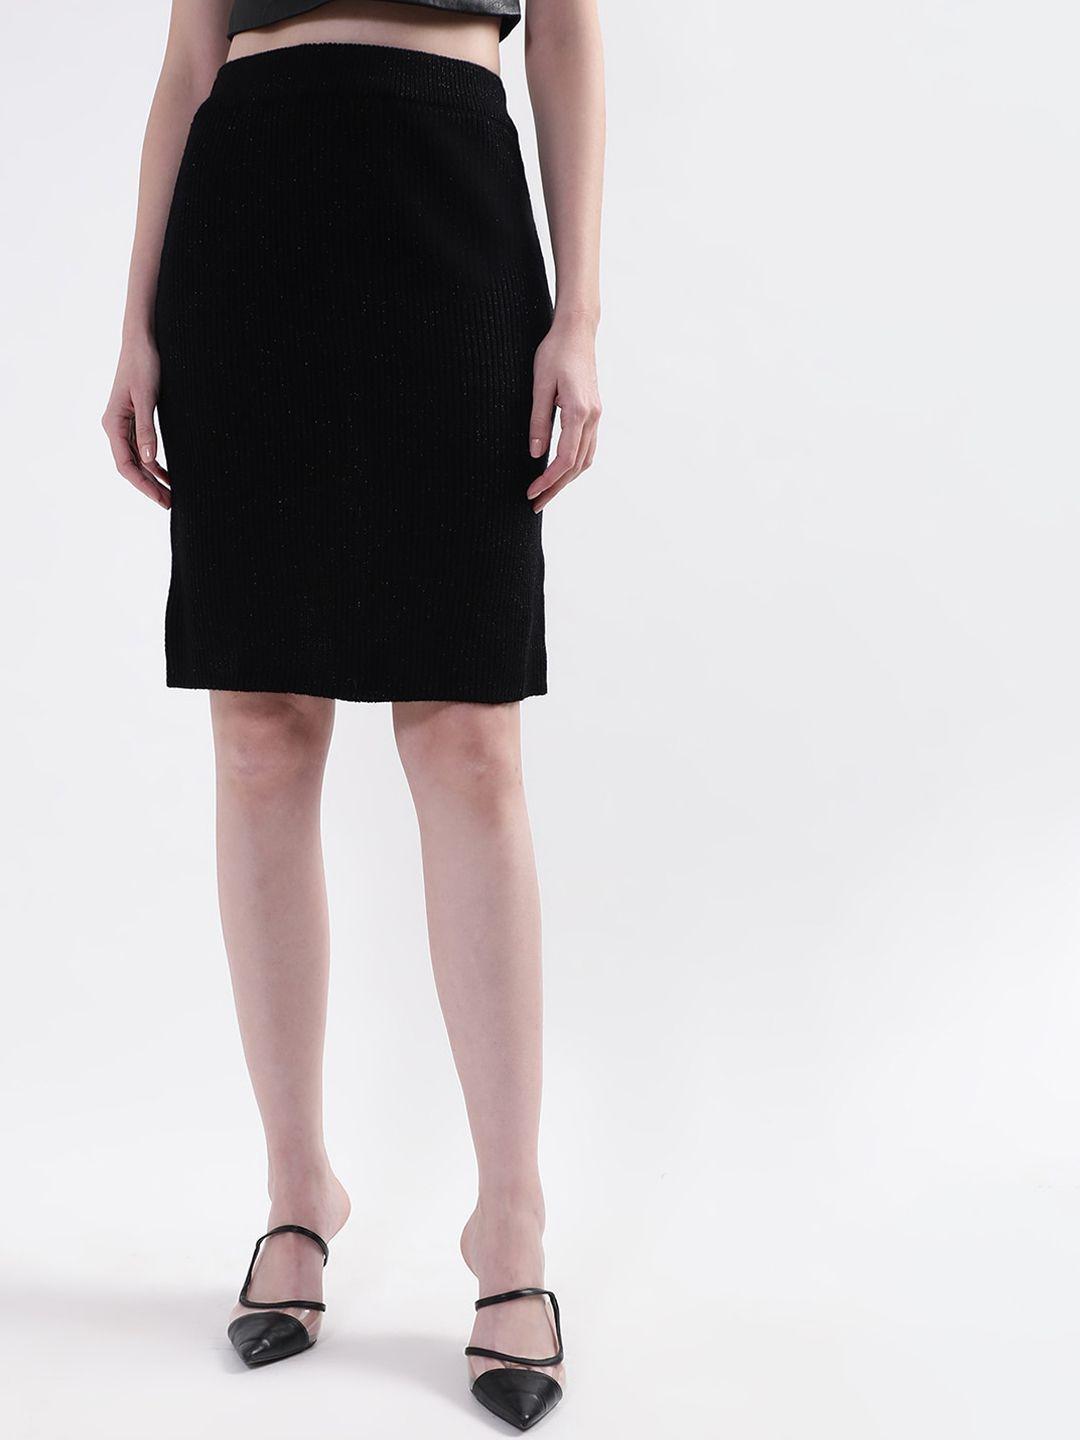 centrestage-women-black-solid-knee-length-pencil-skirt